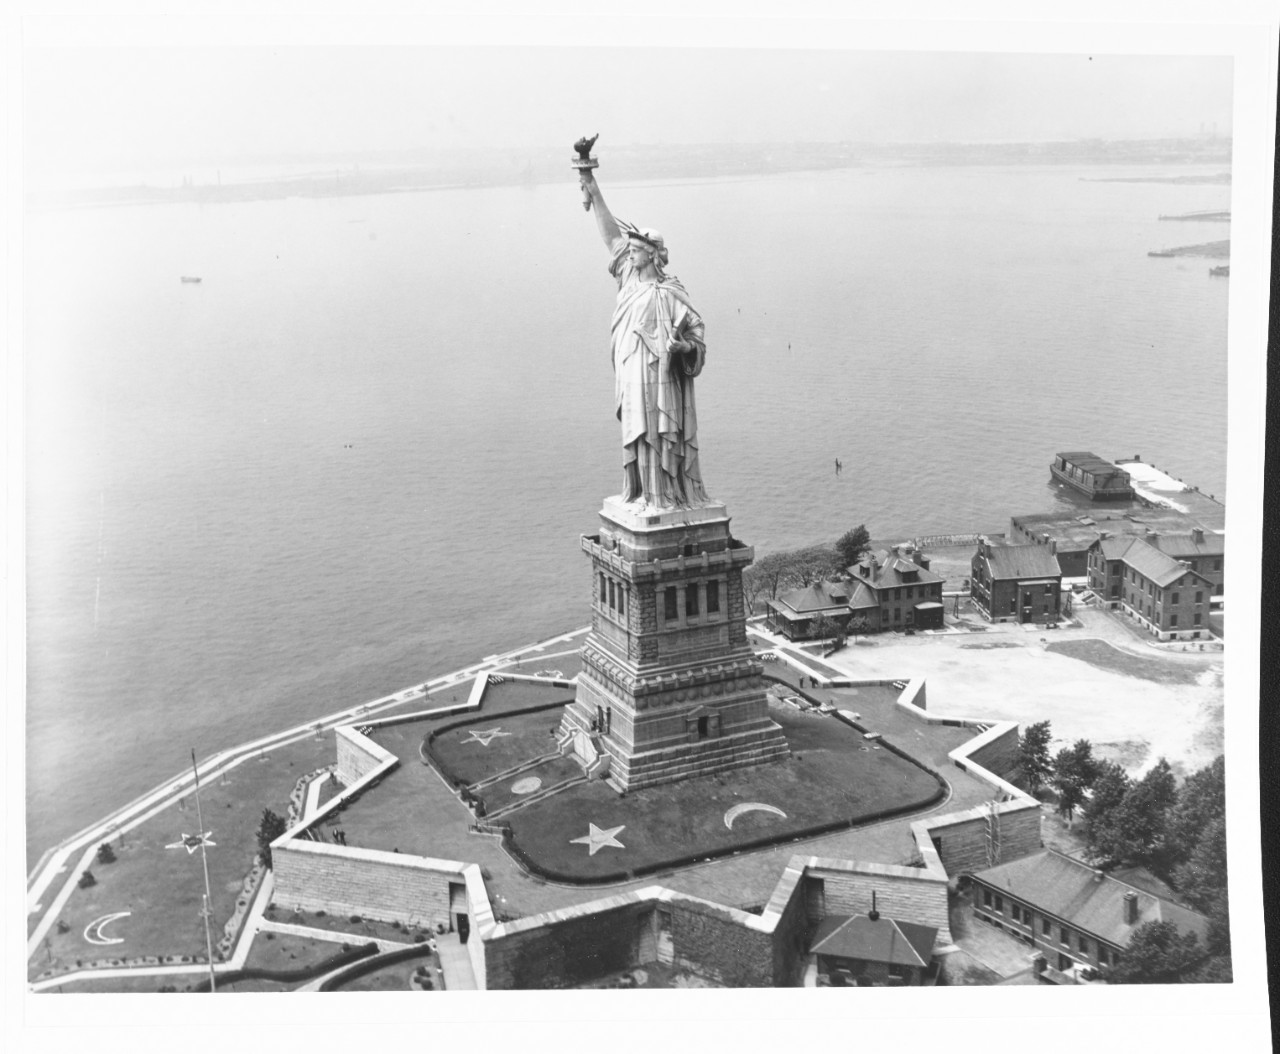 The Statue of Liberty, New York Harbor